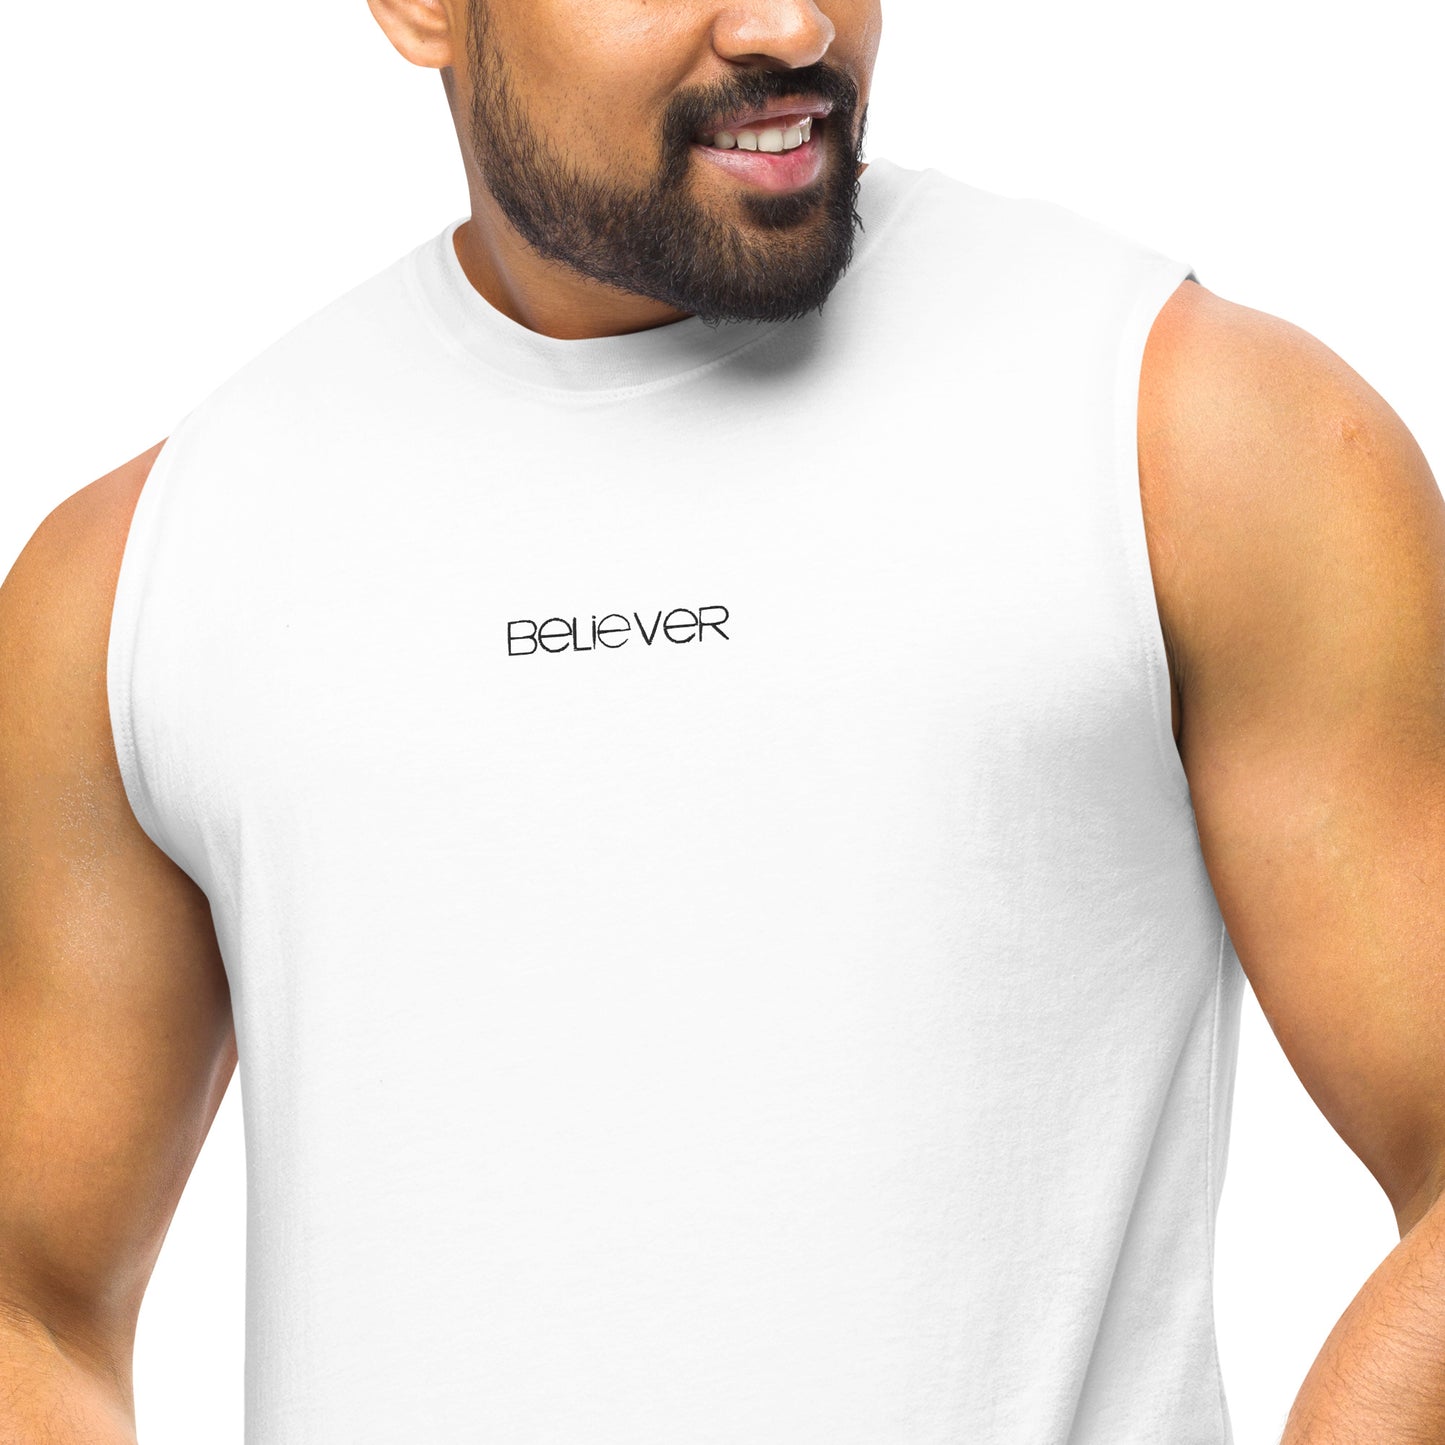 "BELIEVER" Muscle Shirt